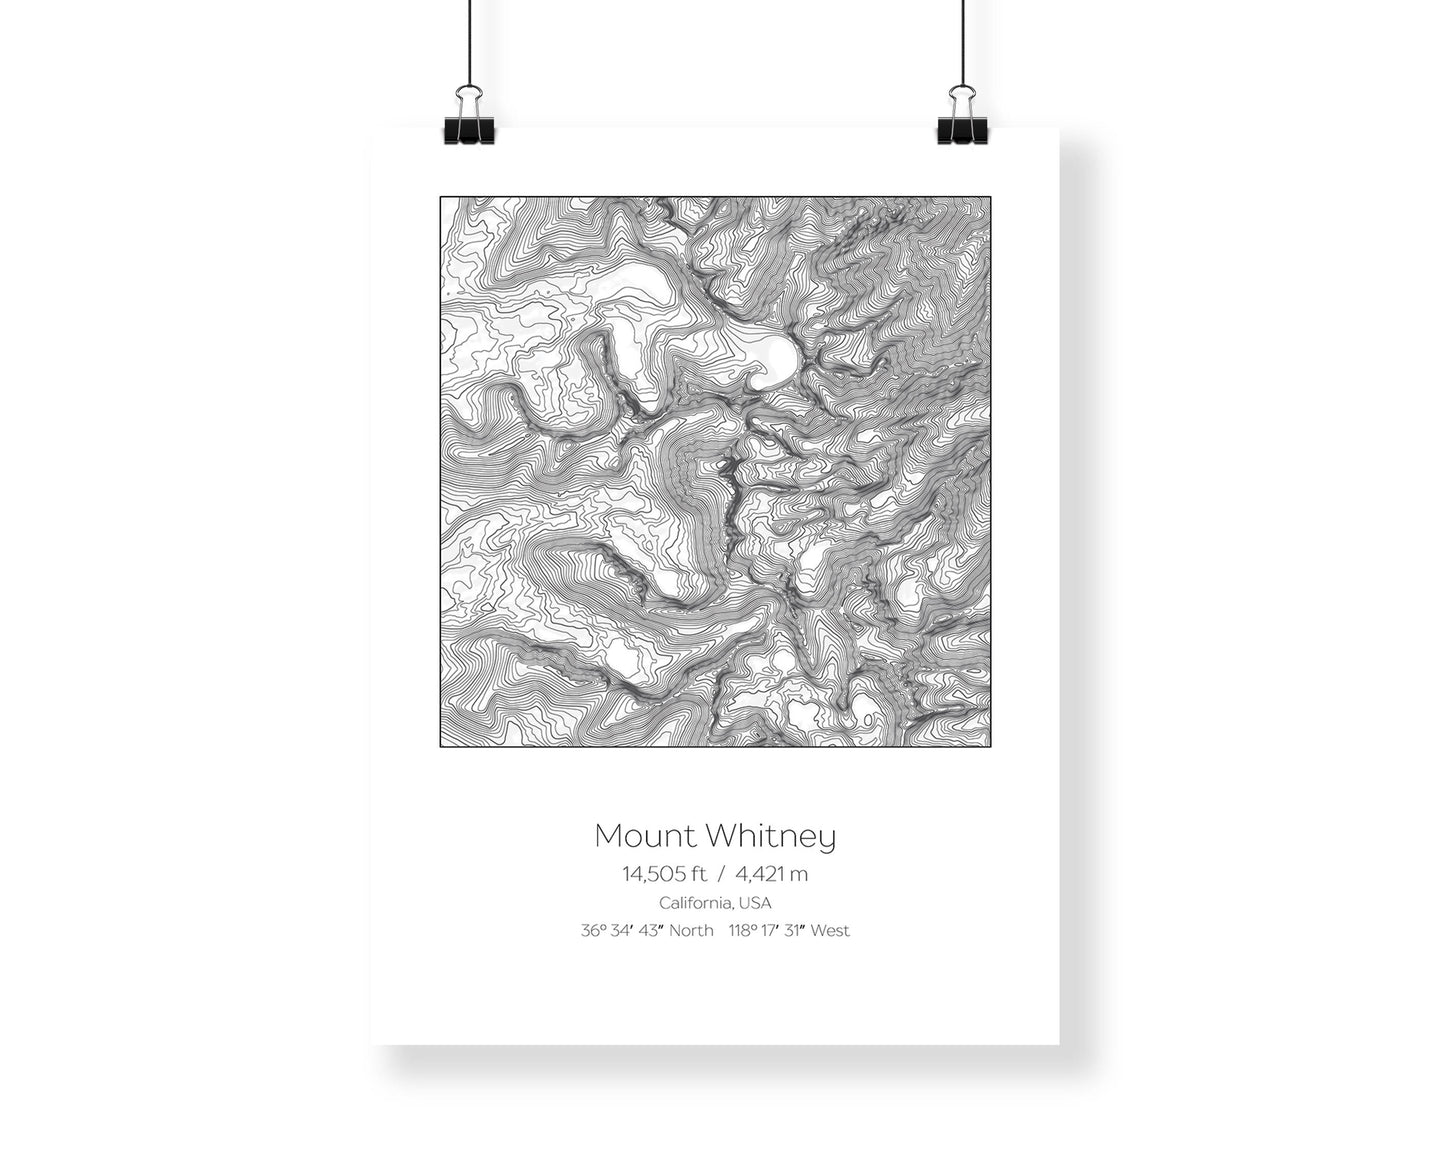 Mount Whitney, California Topography Elevation Print Wall Art